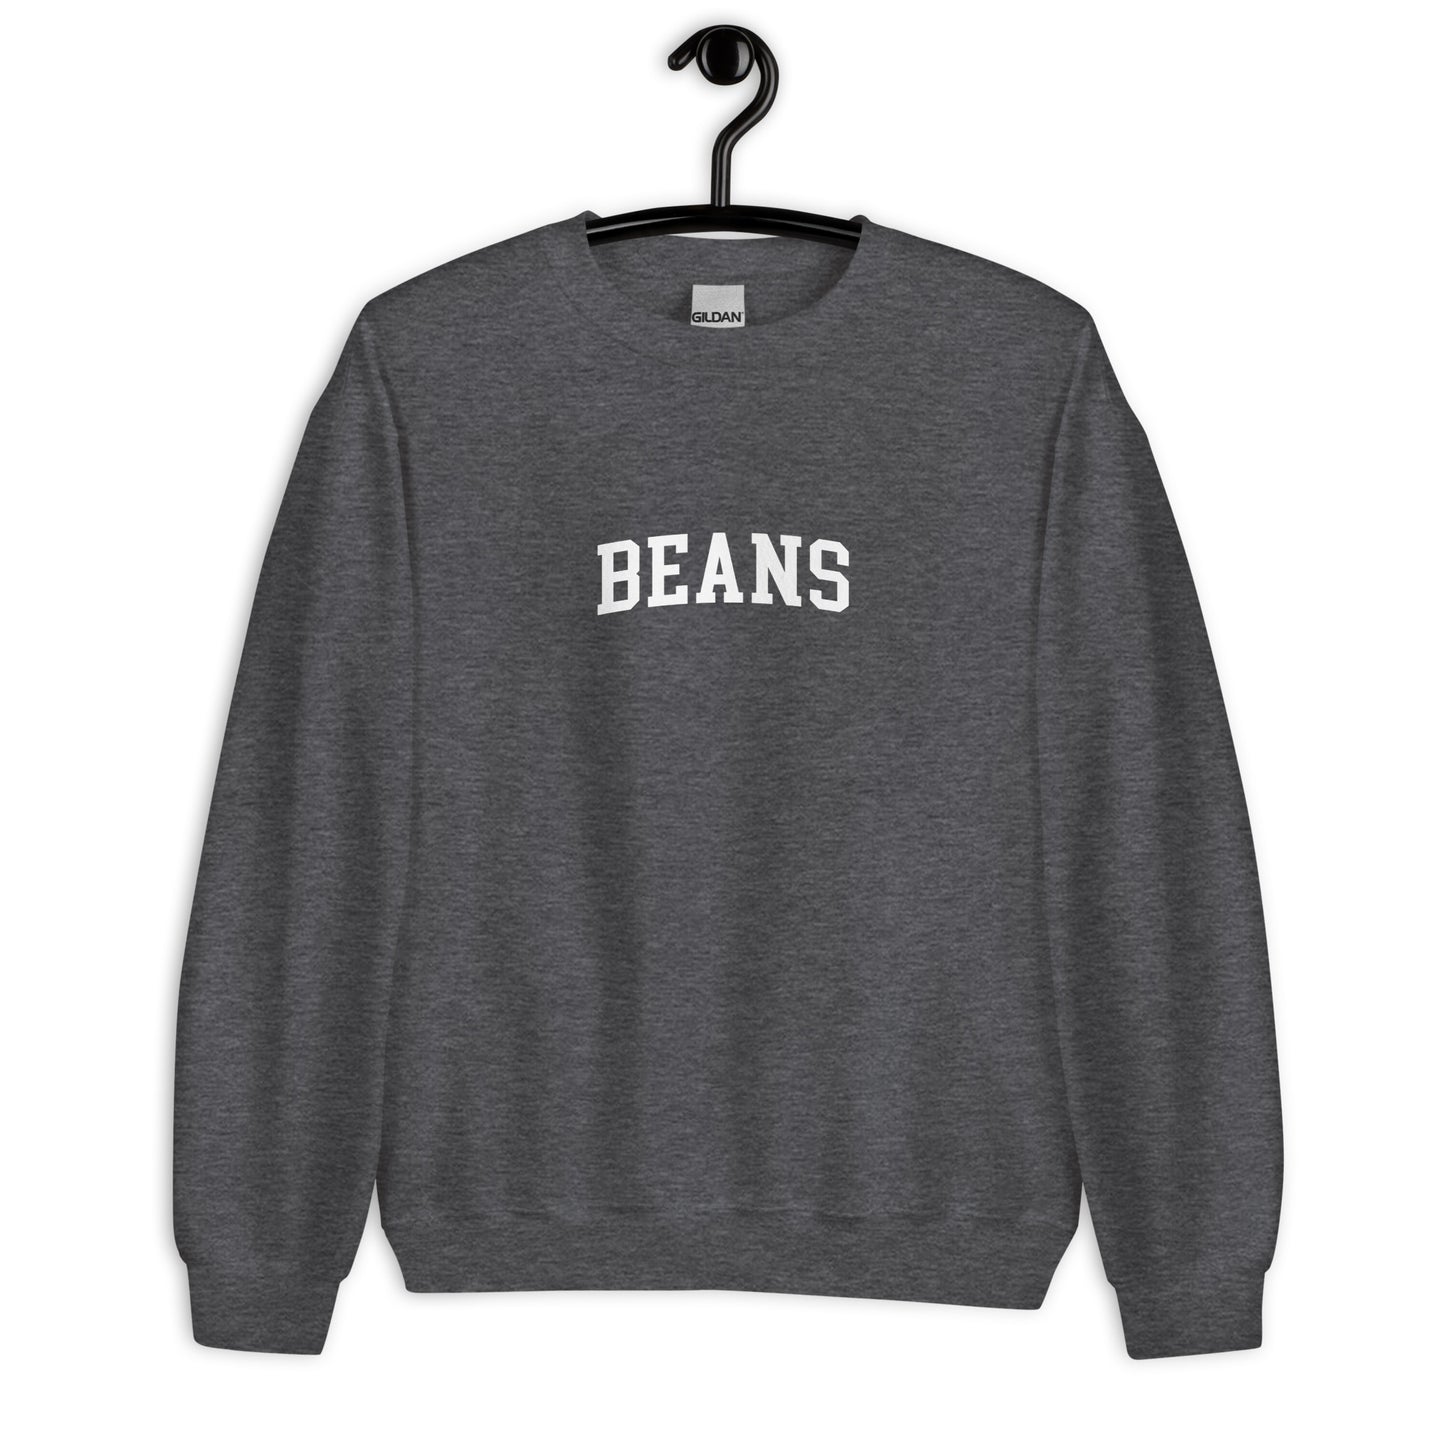 Beans Sweatshirt - Arched Font